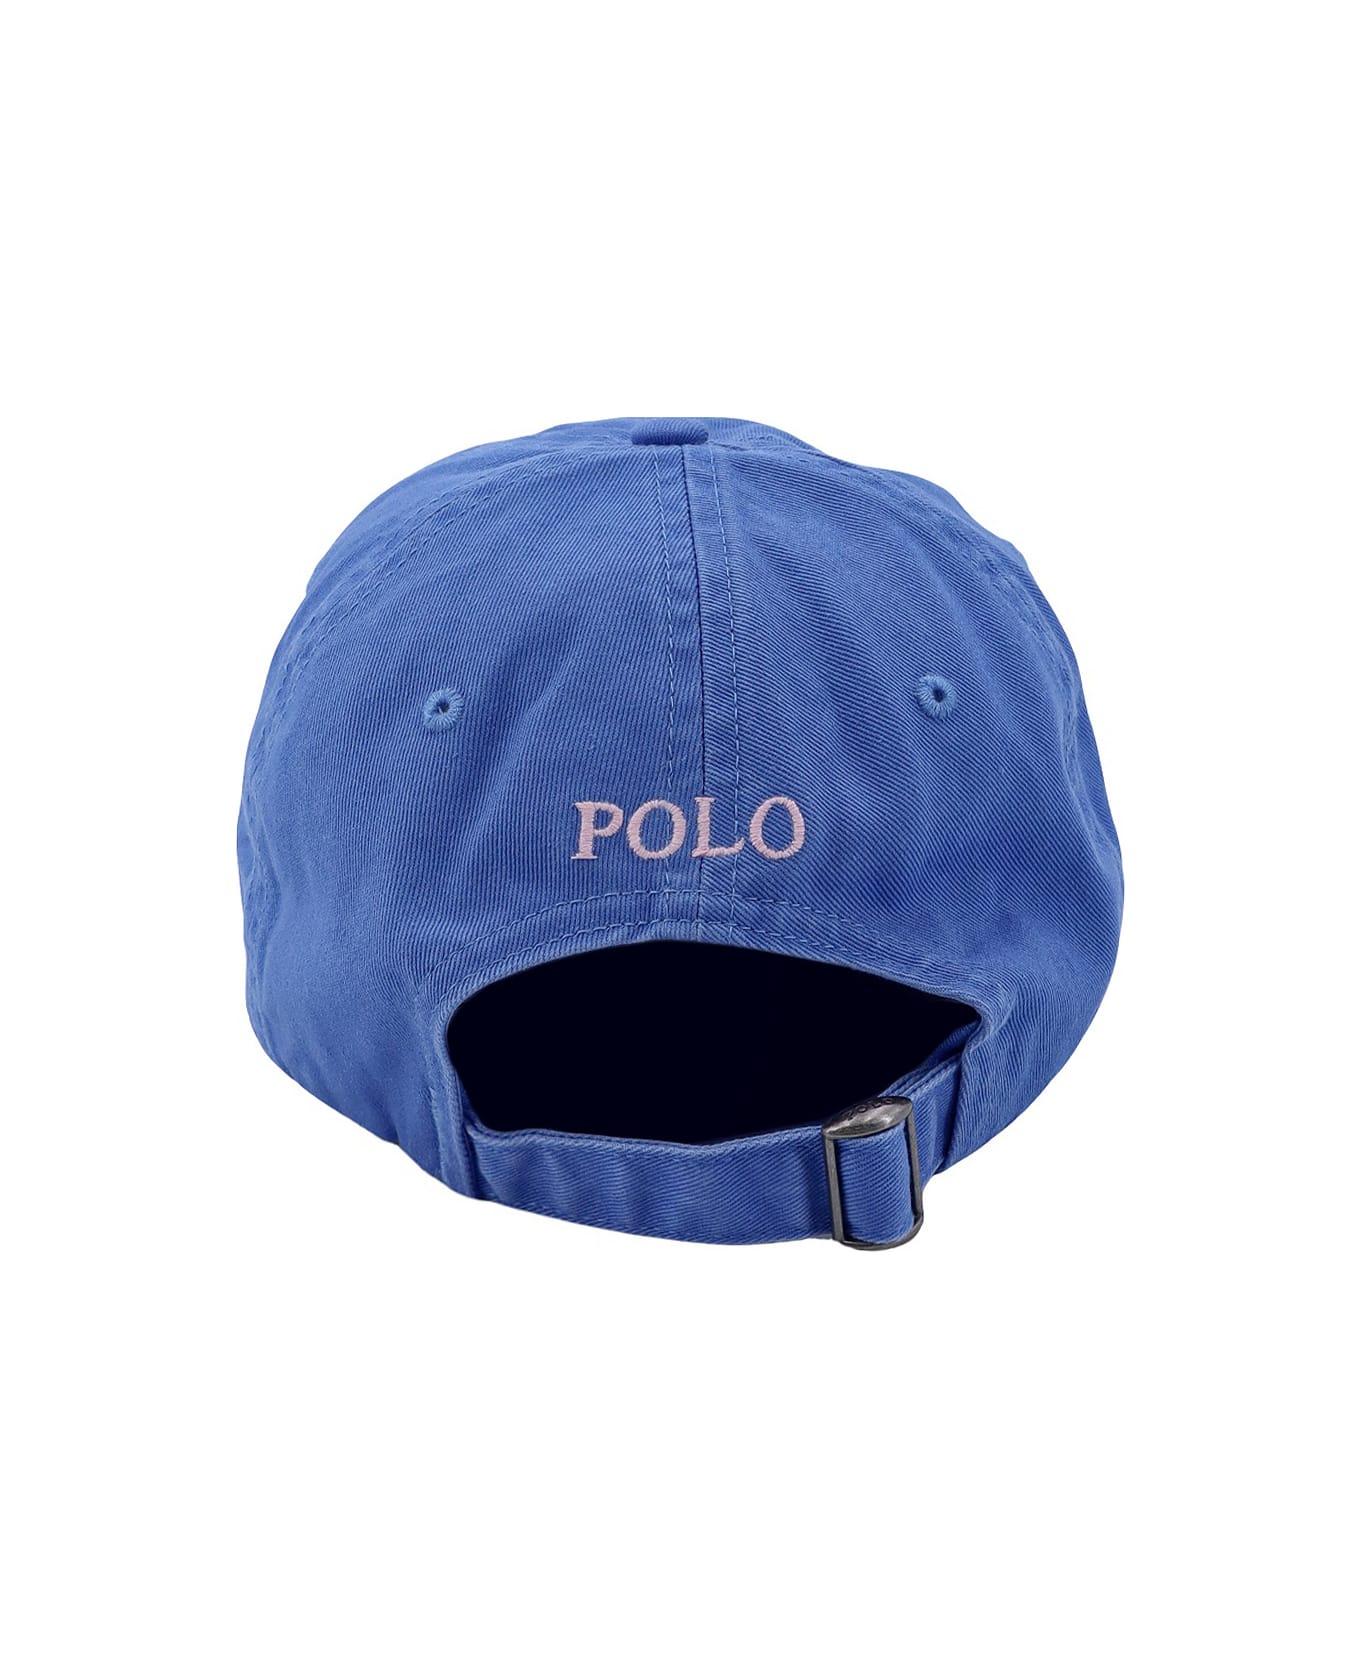 Ralph Lauren Hat - New England Blue 帽子